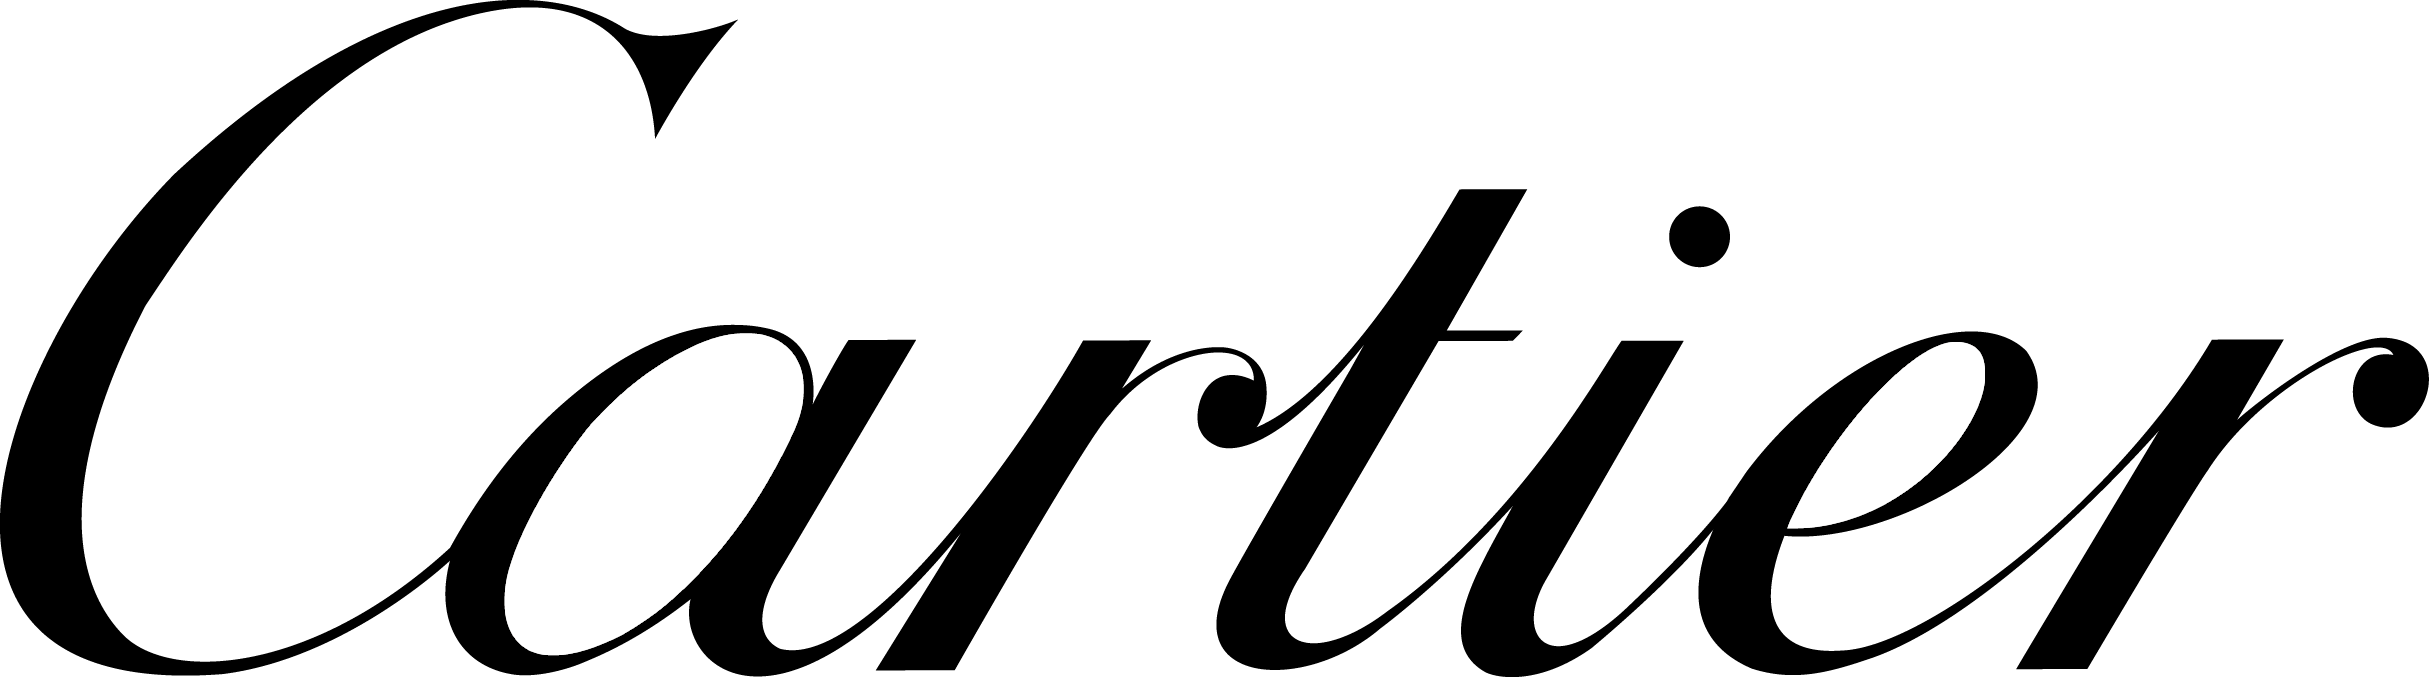 Cartier Logo Download Vector